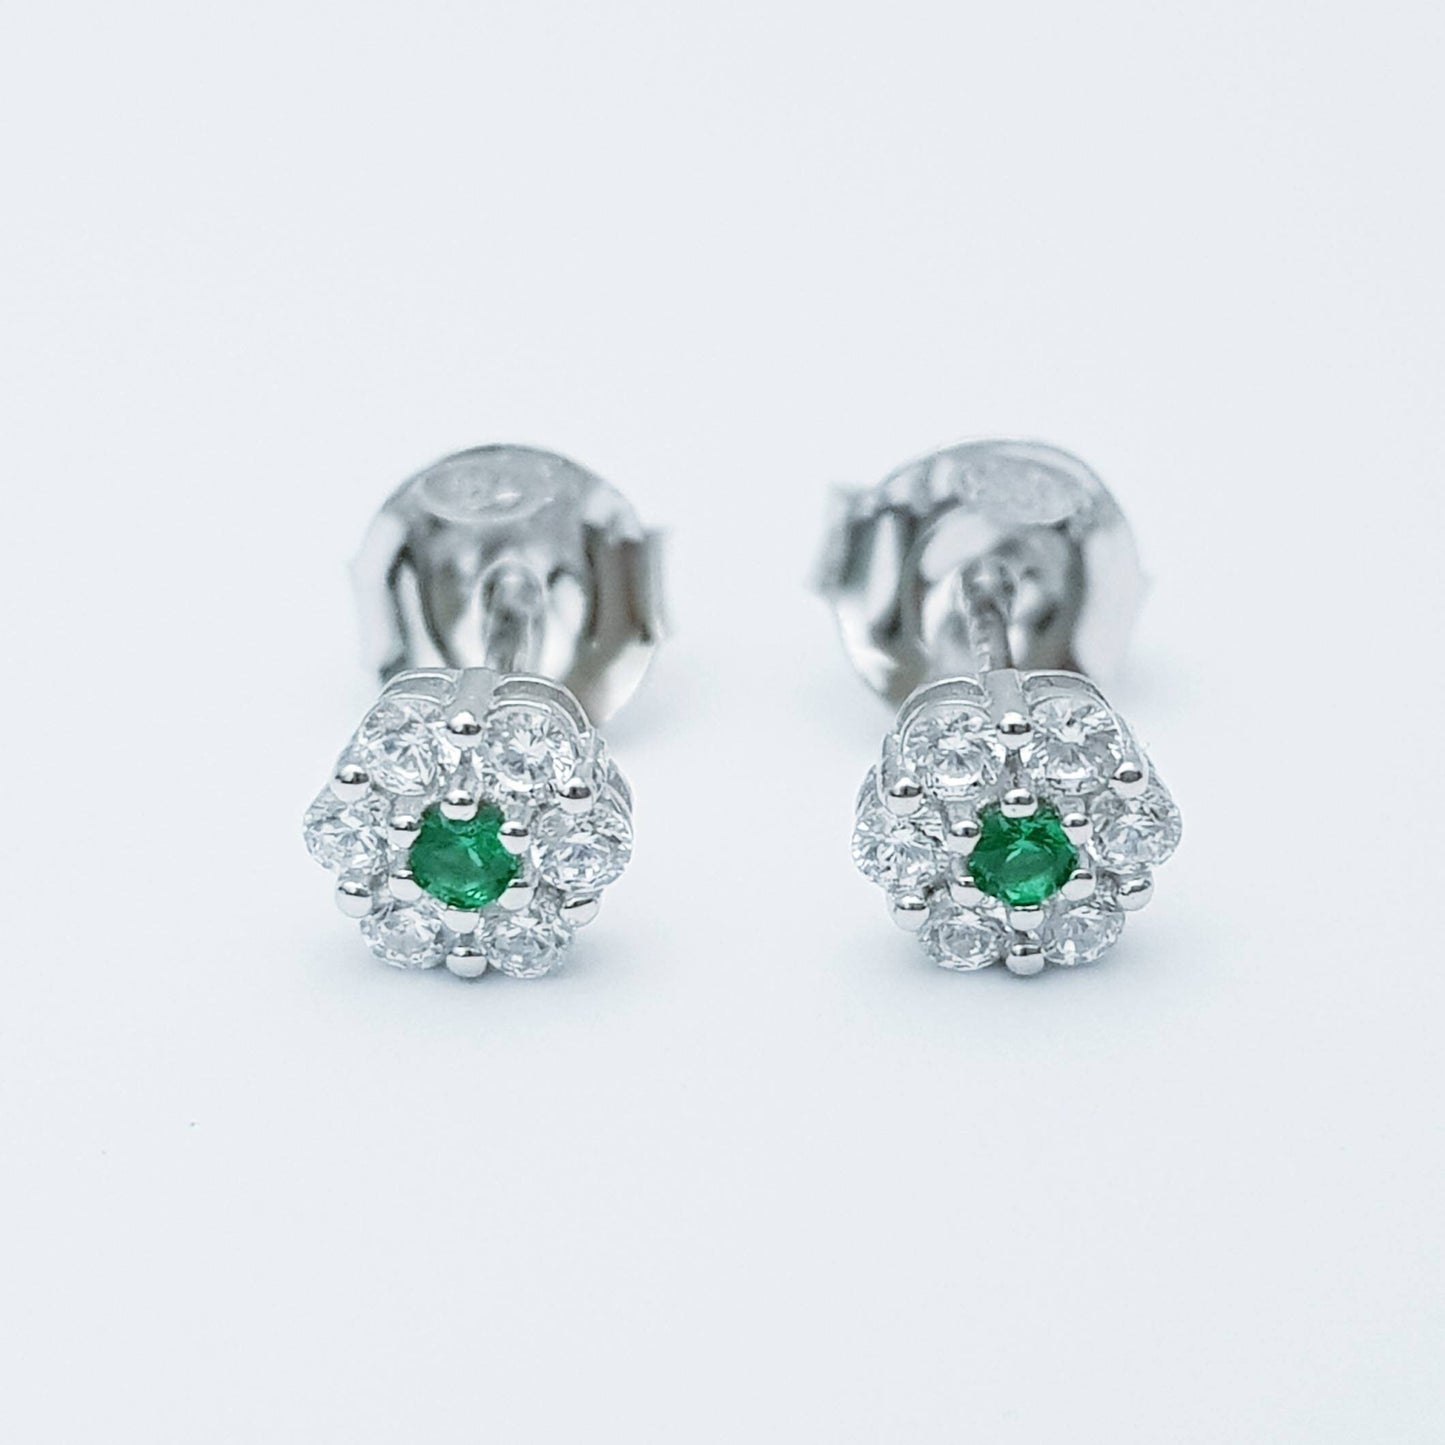 Small emerald green stud earrings, vintage earrings, emerald and diamond halo earrings, second hole earrings, may birthstone studs